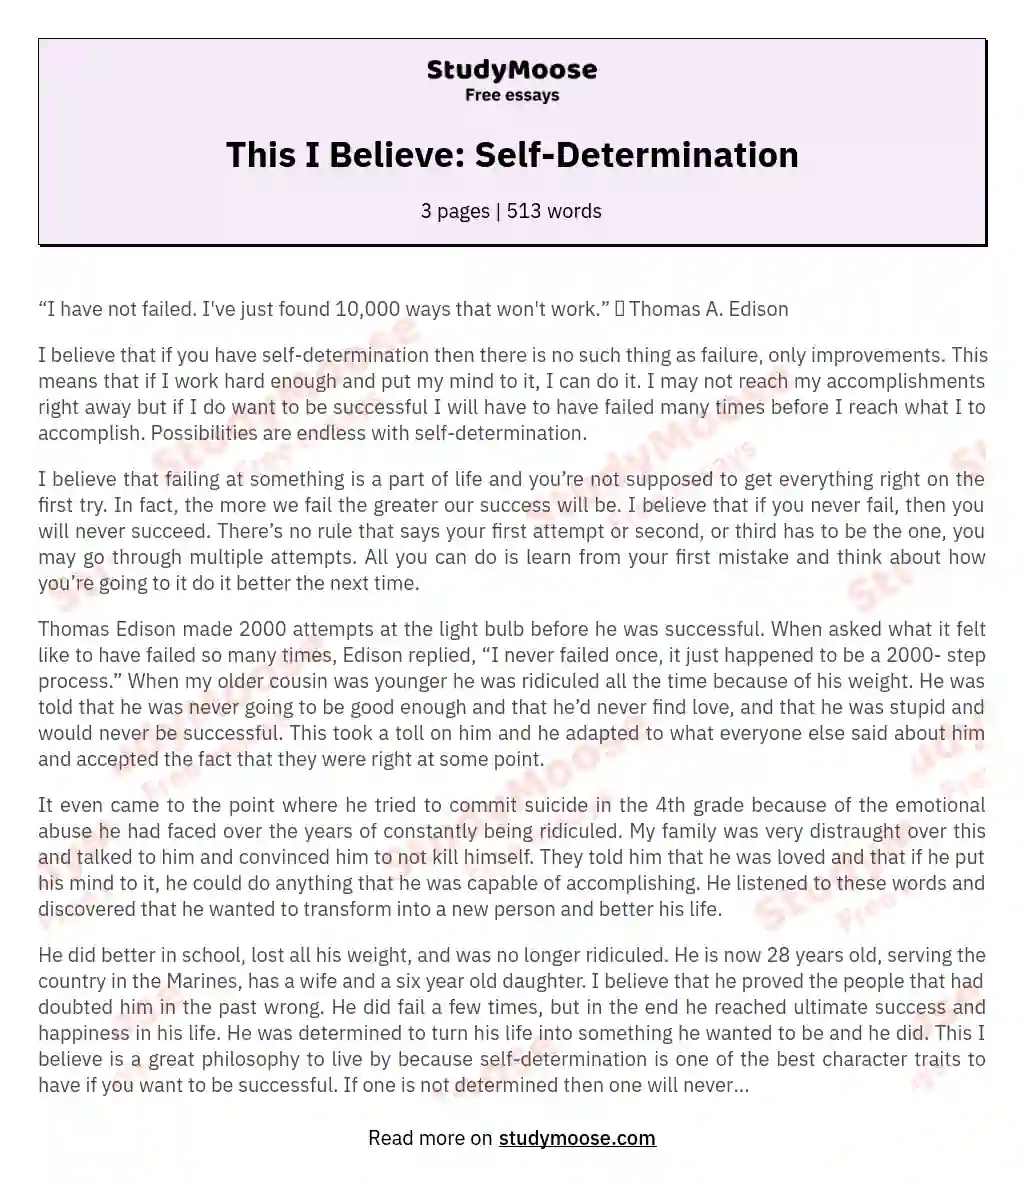 This I Believe: Self-Determination essay